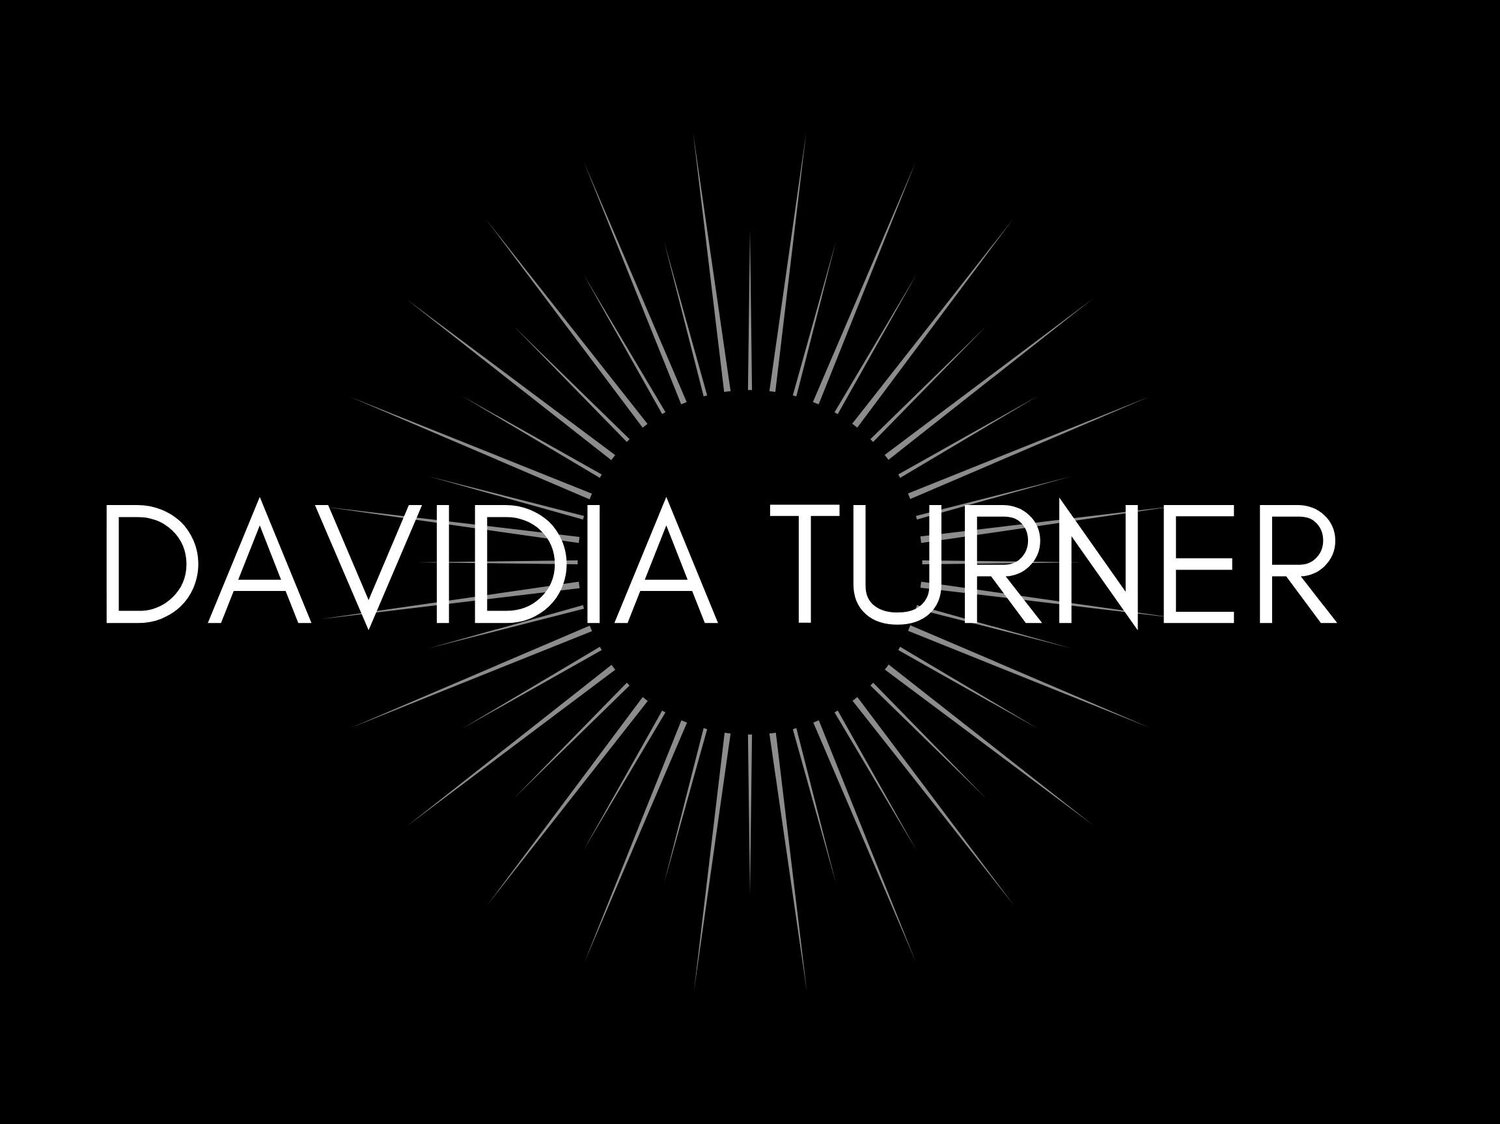 Davidia Turner